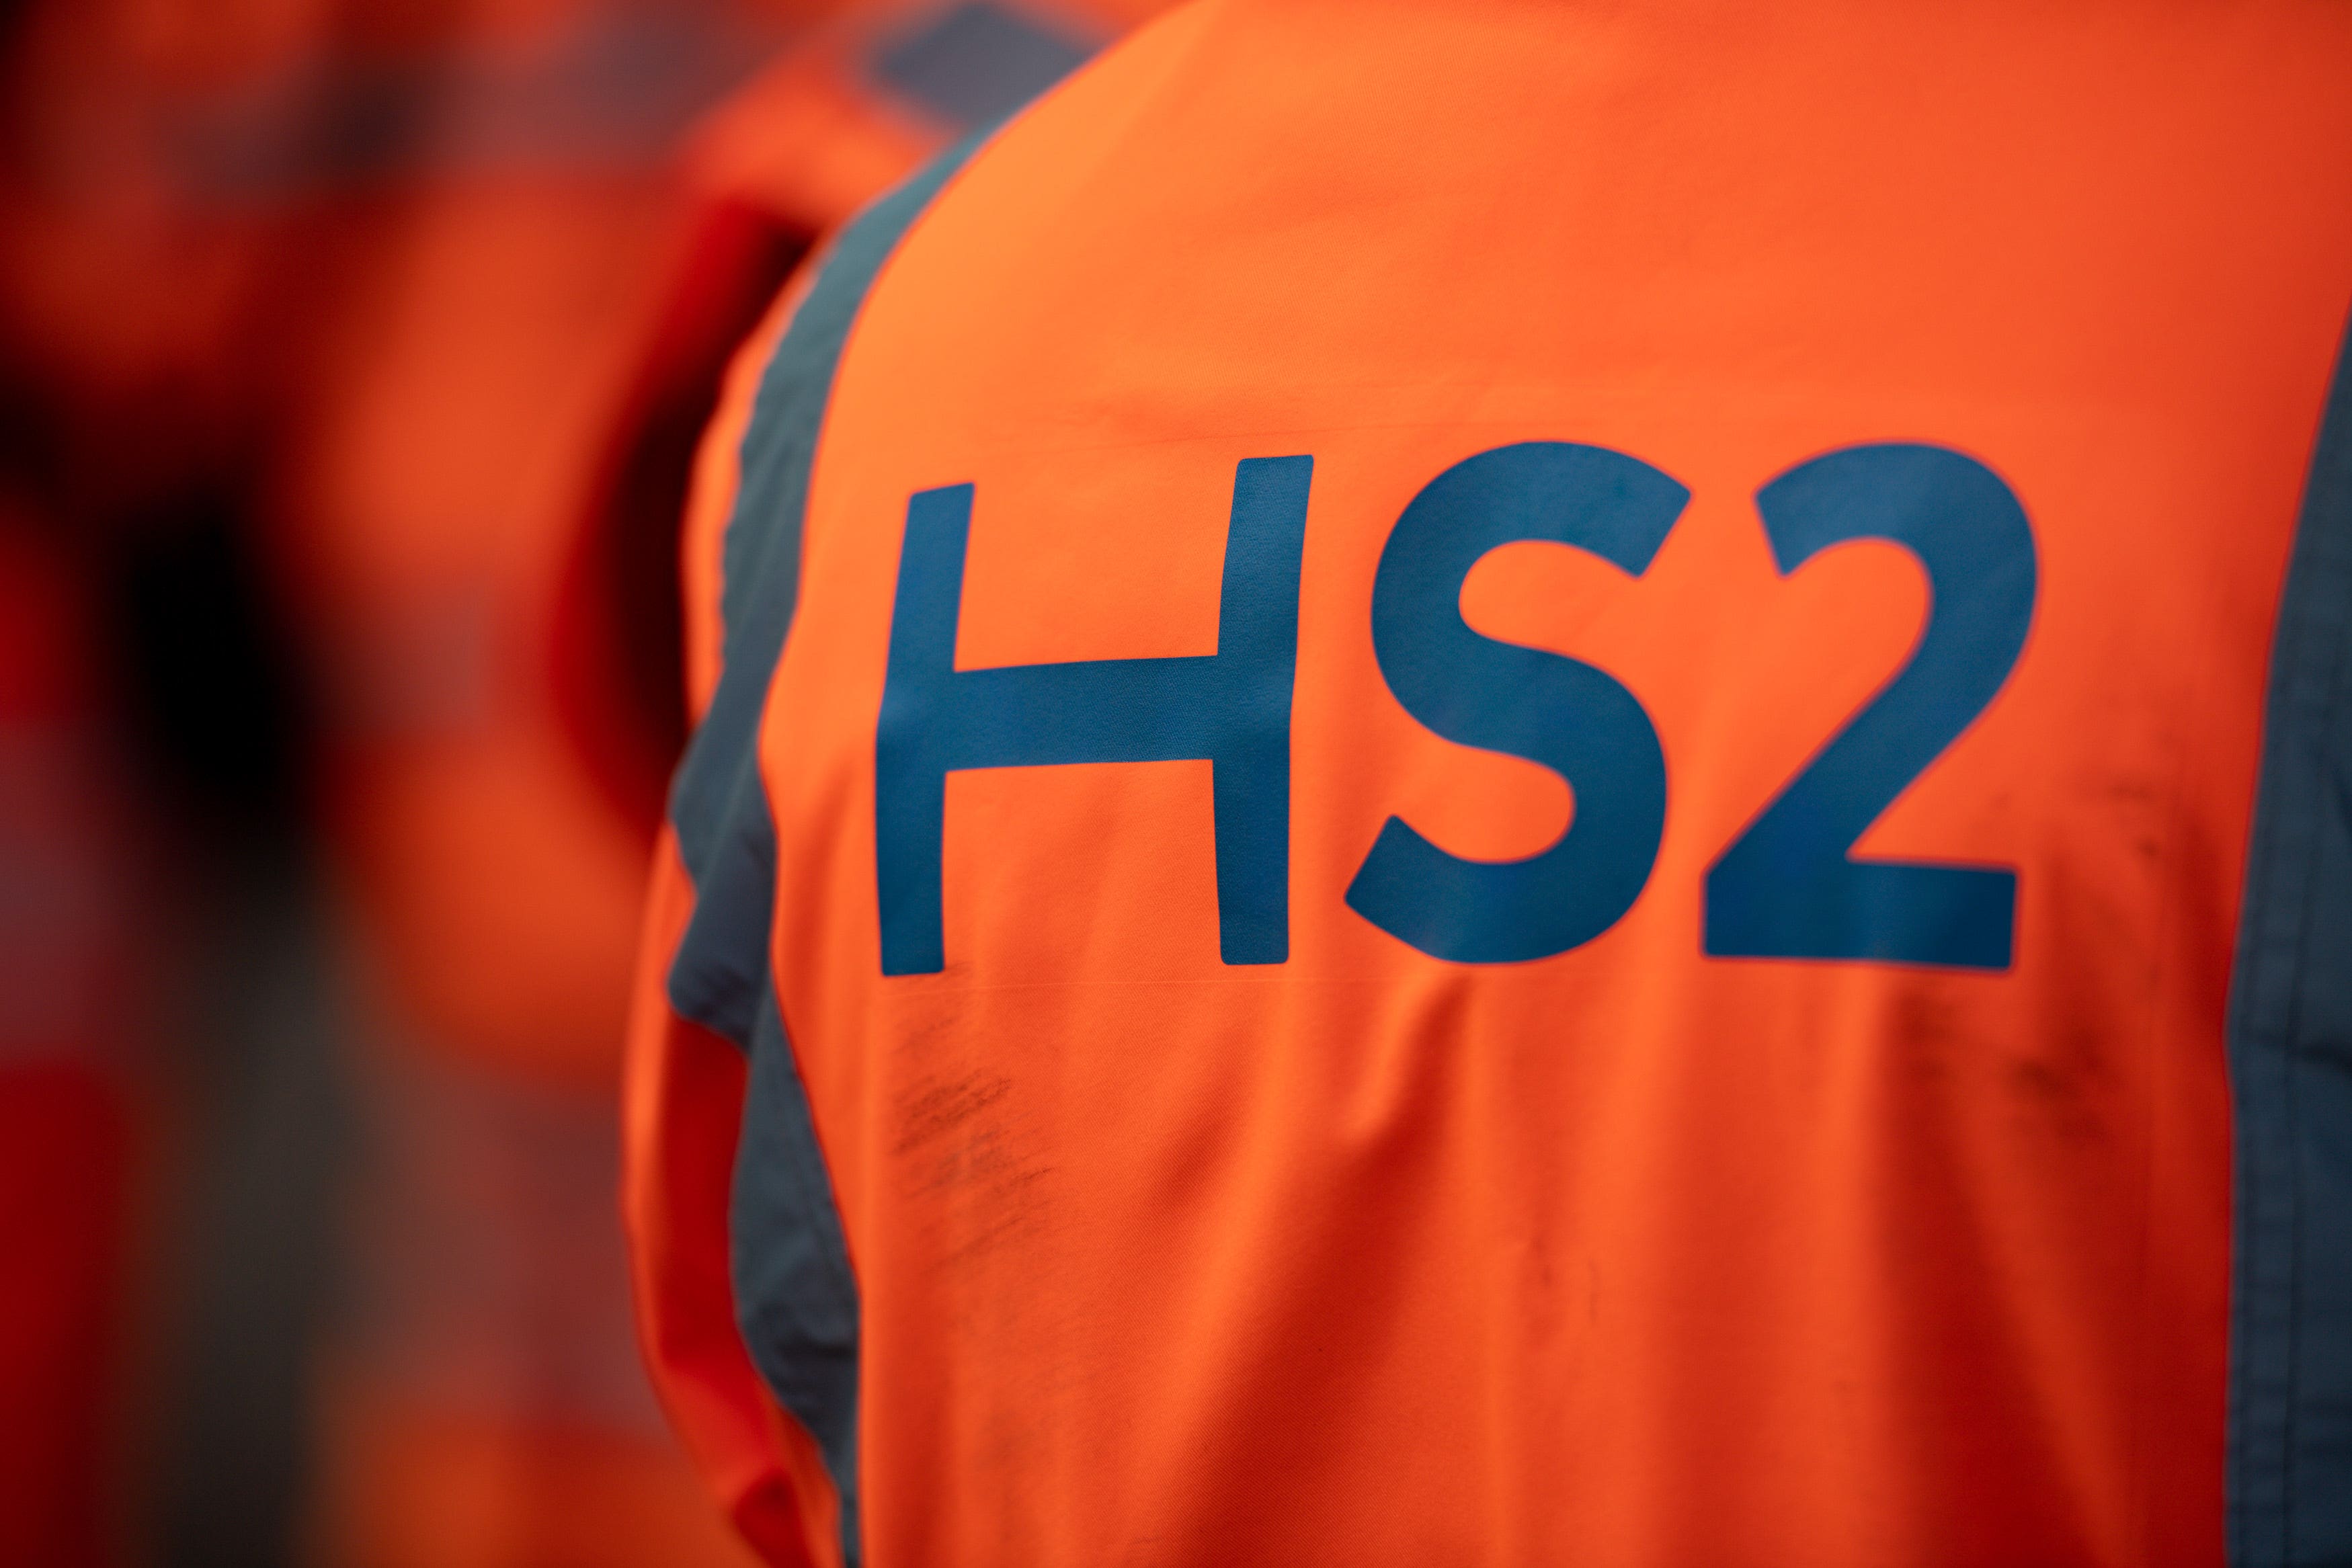 Earlier this month, HS2 Ltd’s chief executive Mark Thurston announced his resignation